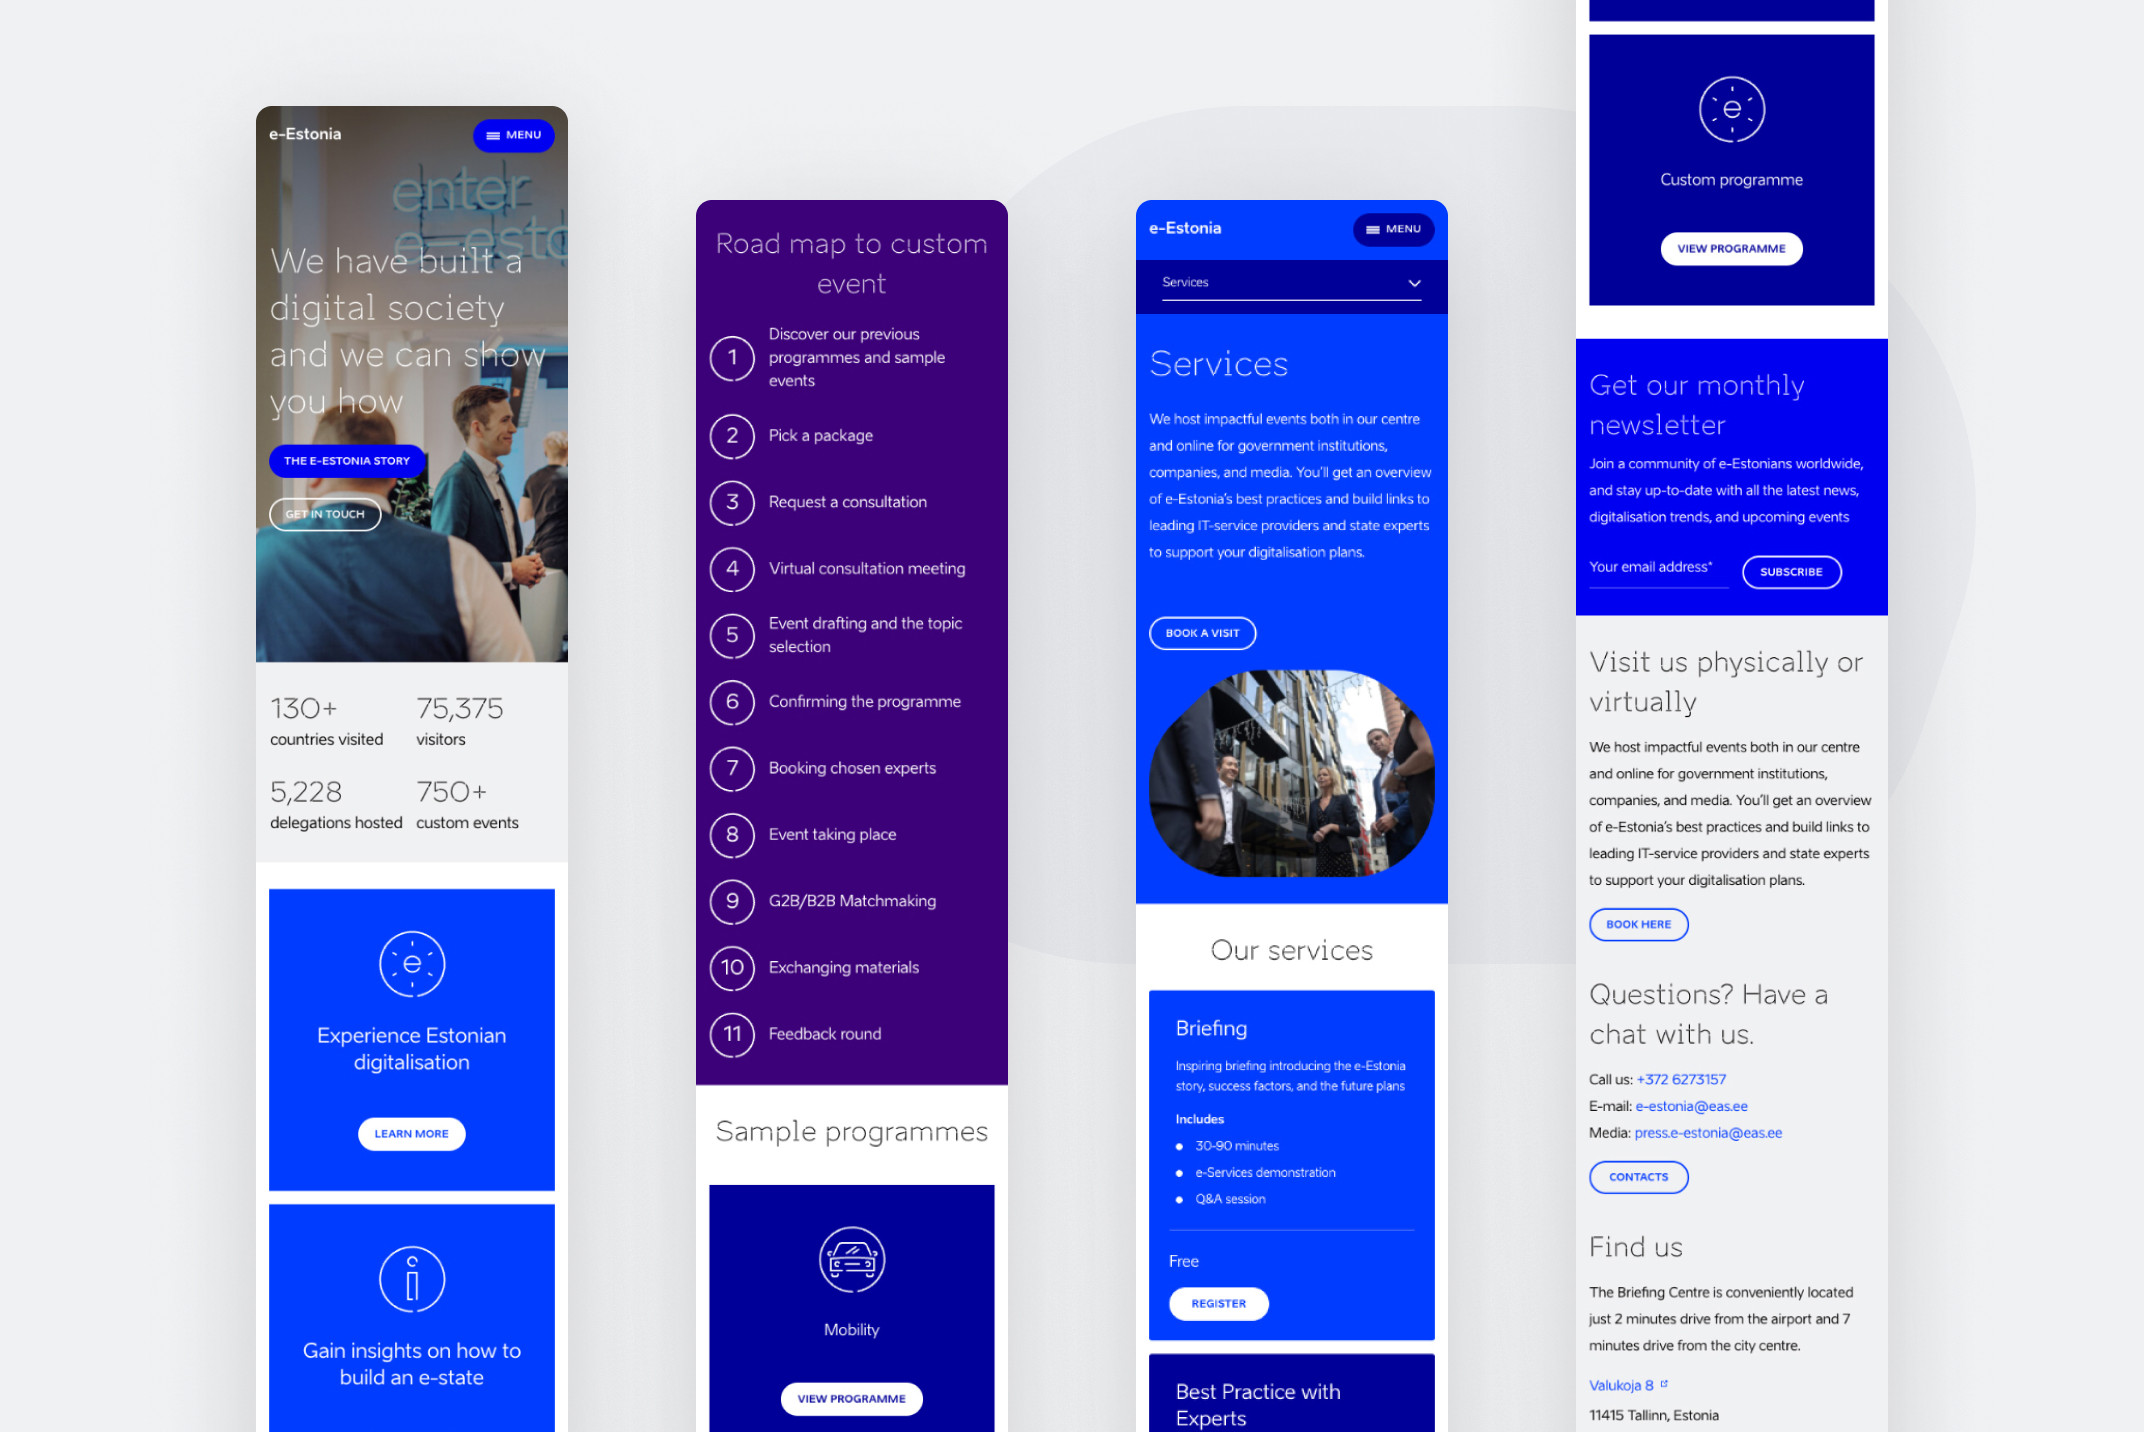 e-estonia website design by DUX